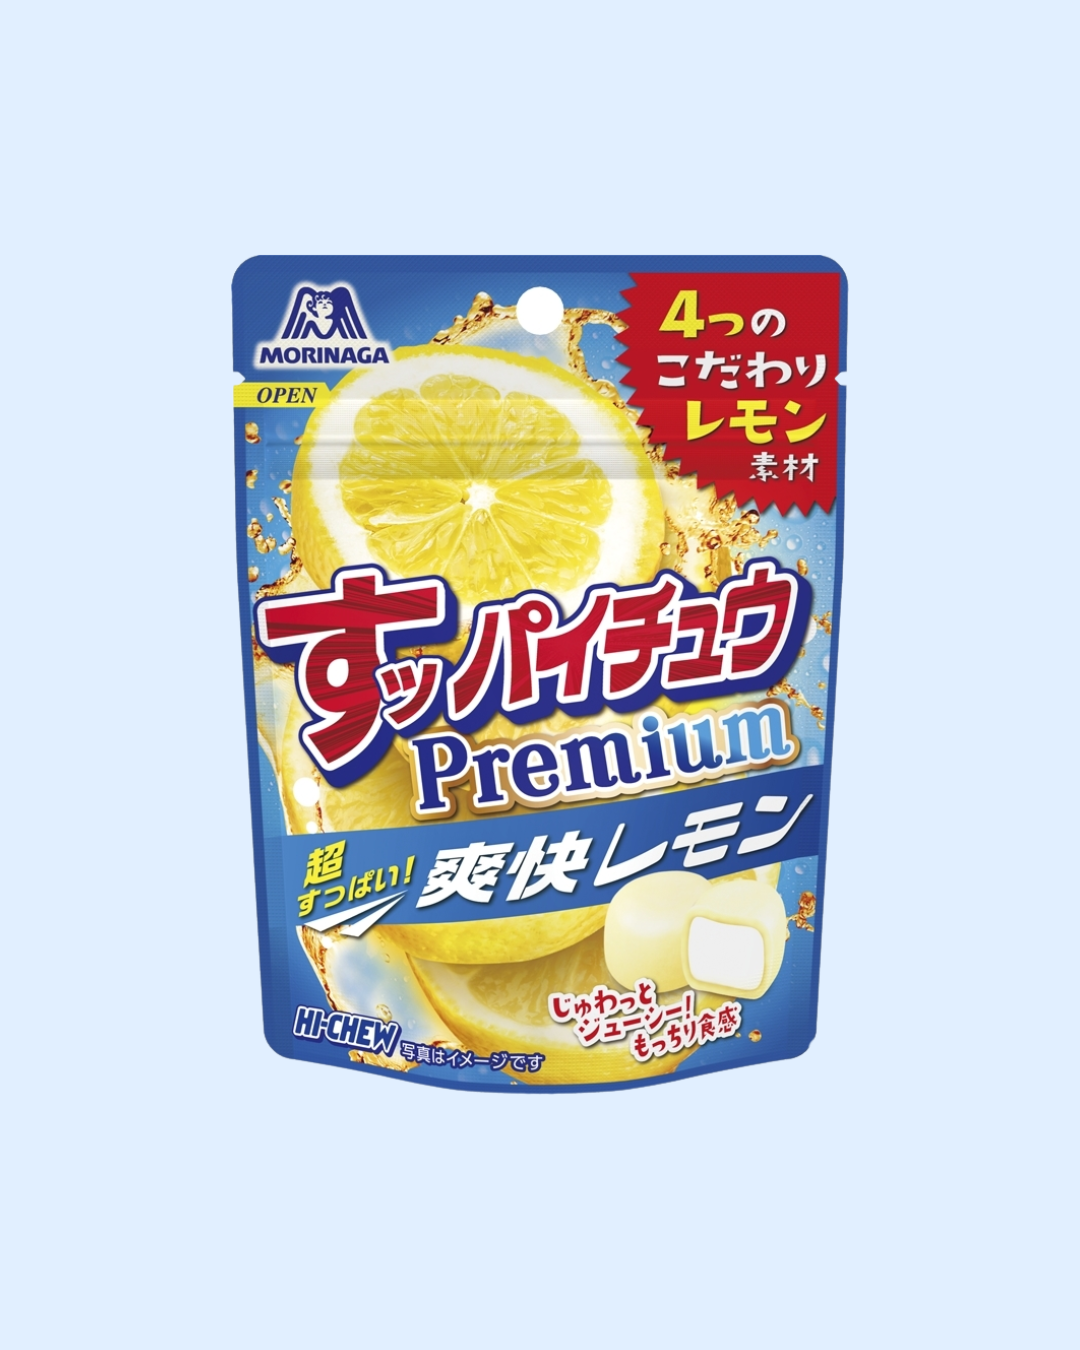 Morinaga Hi-Chew Premium